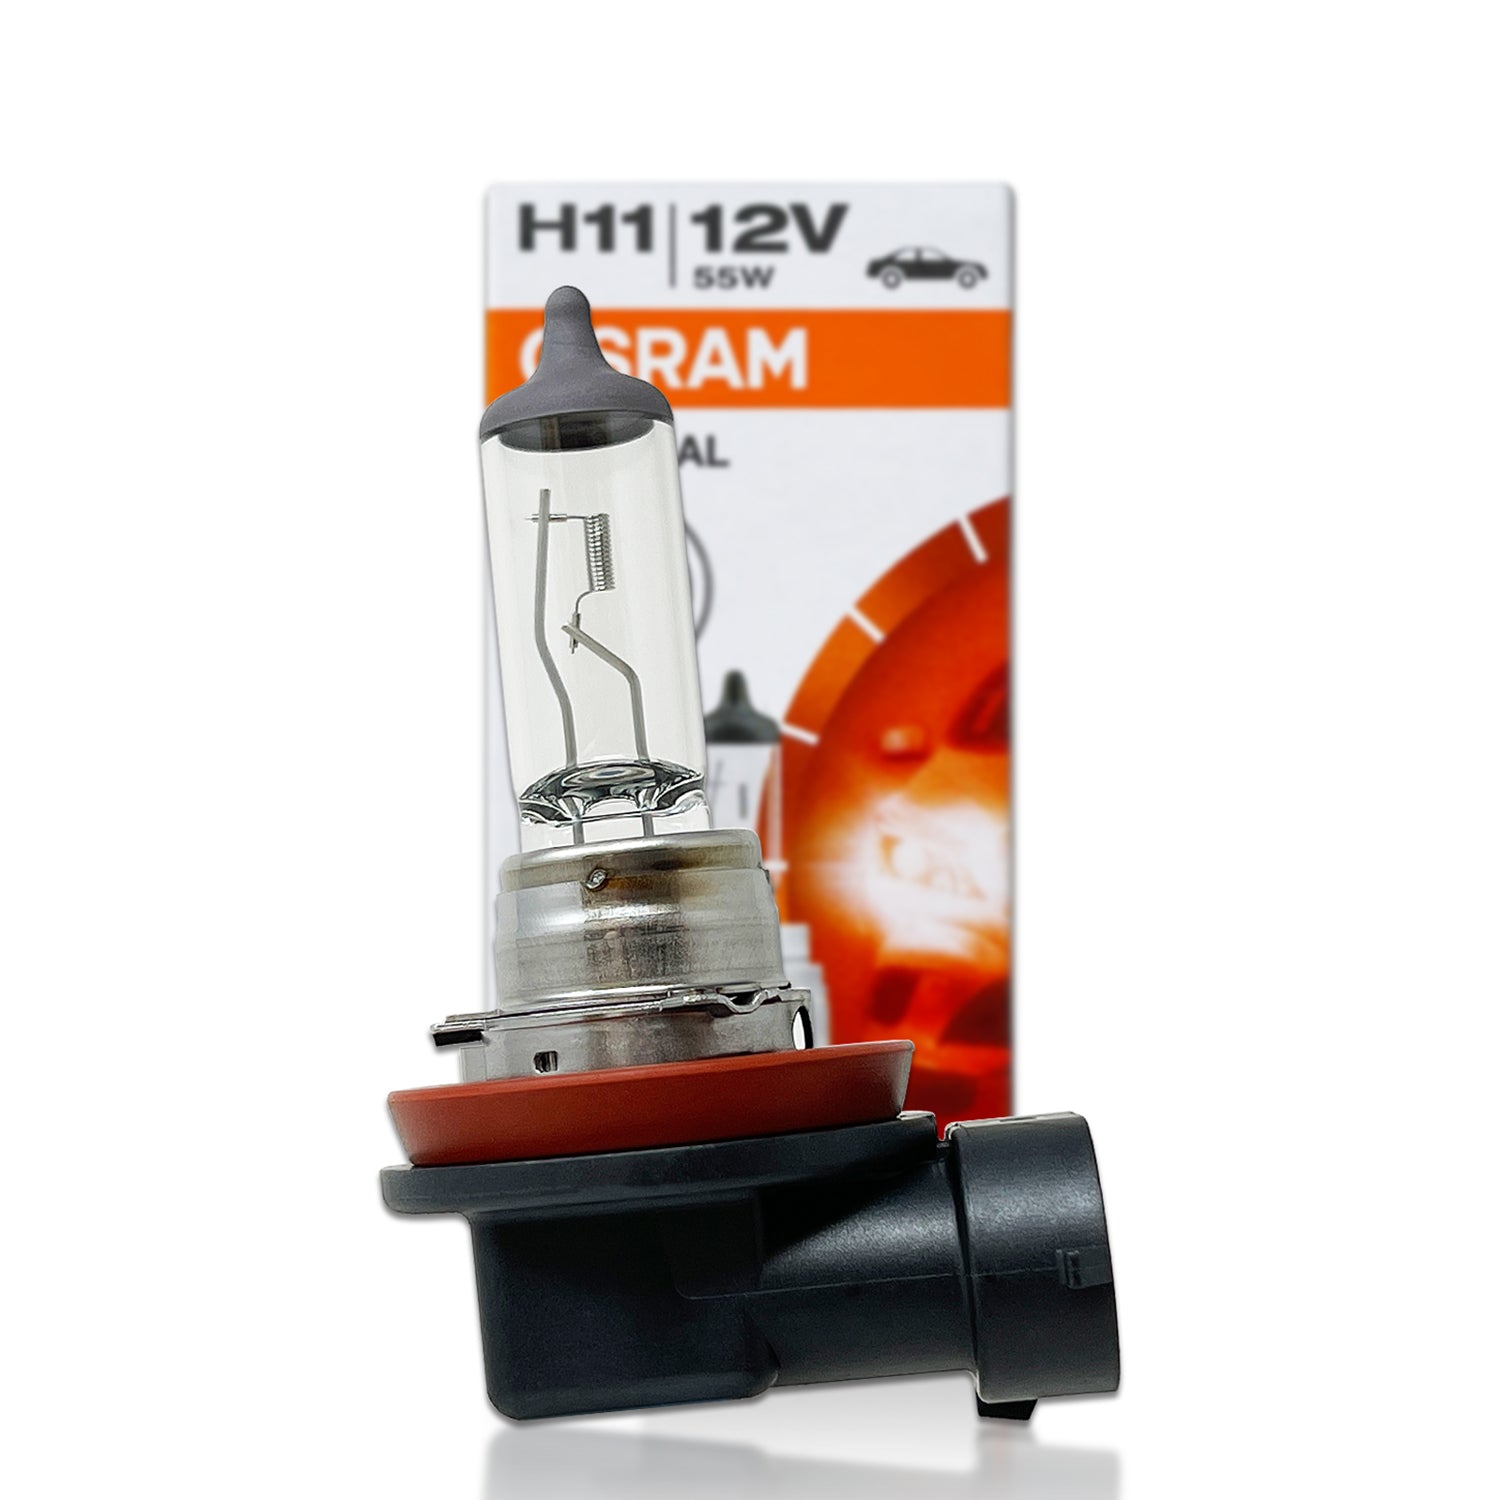 Buy OSRAM 64211NB200 Halogen bulb Night Breaker H11 55 W 12 V